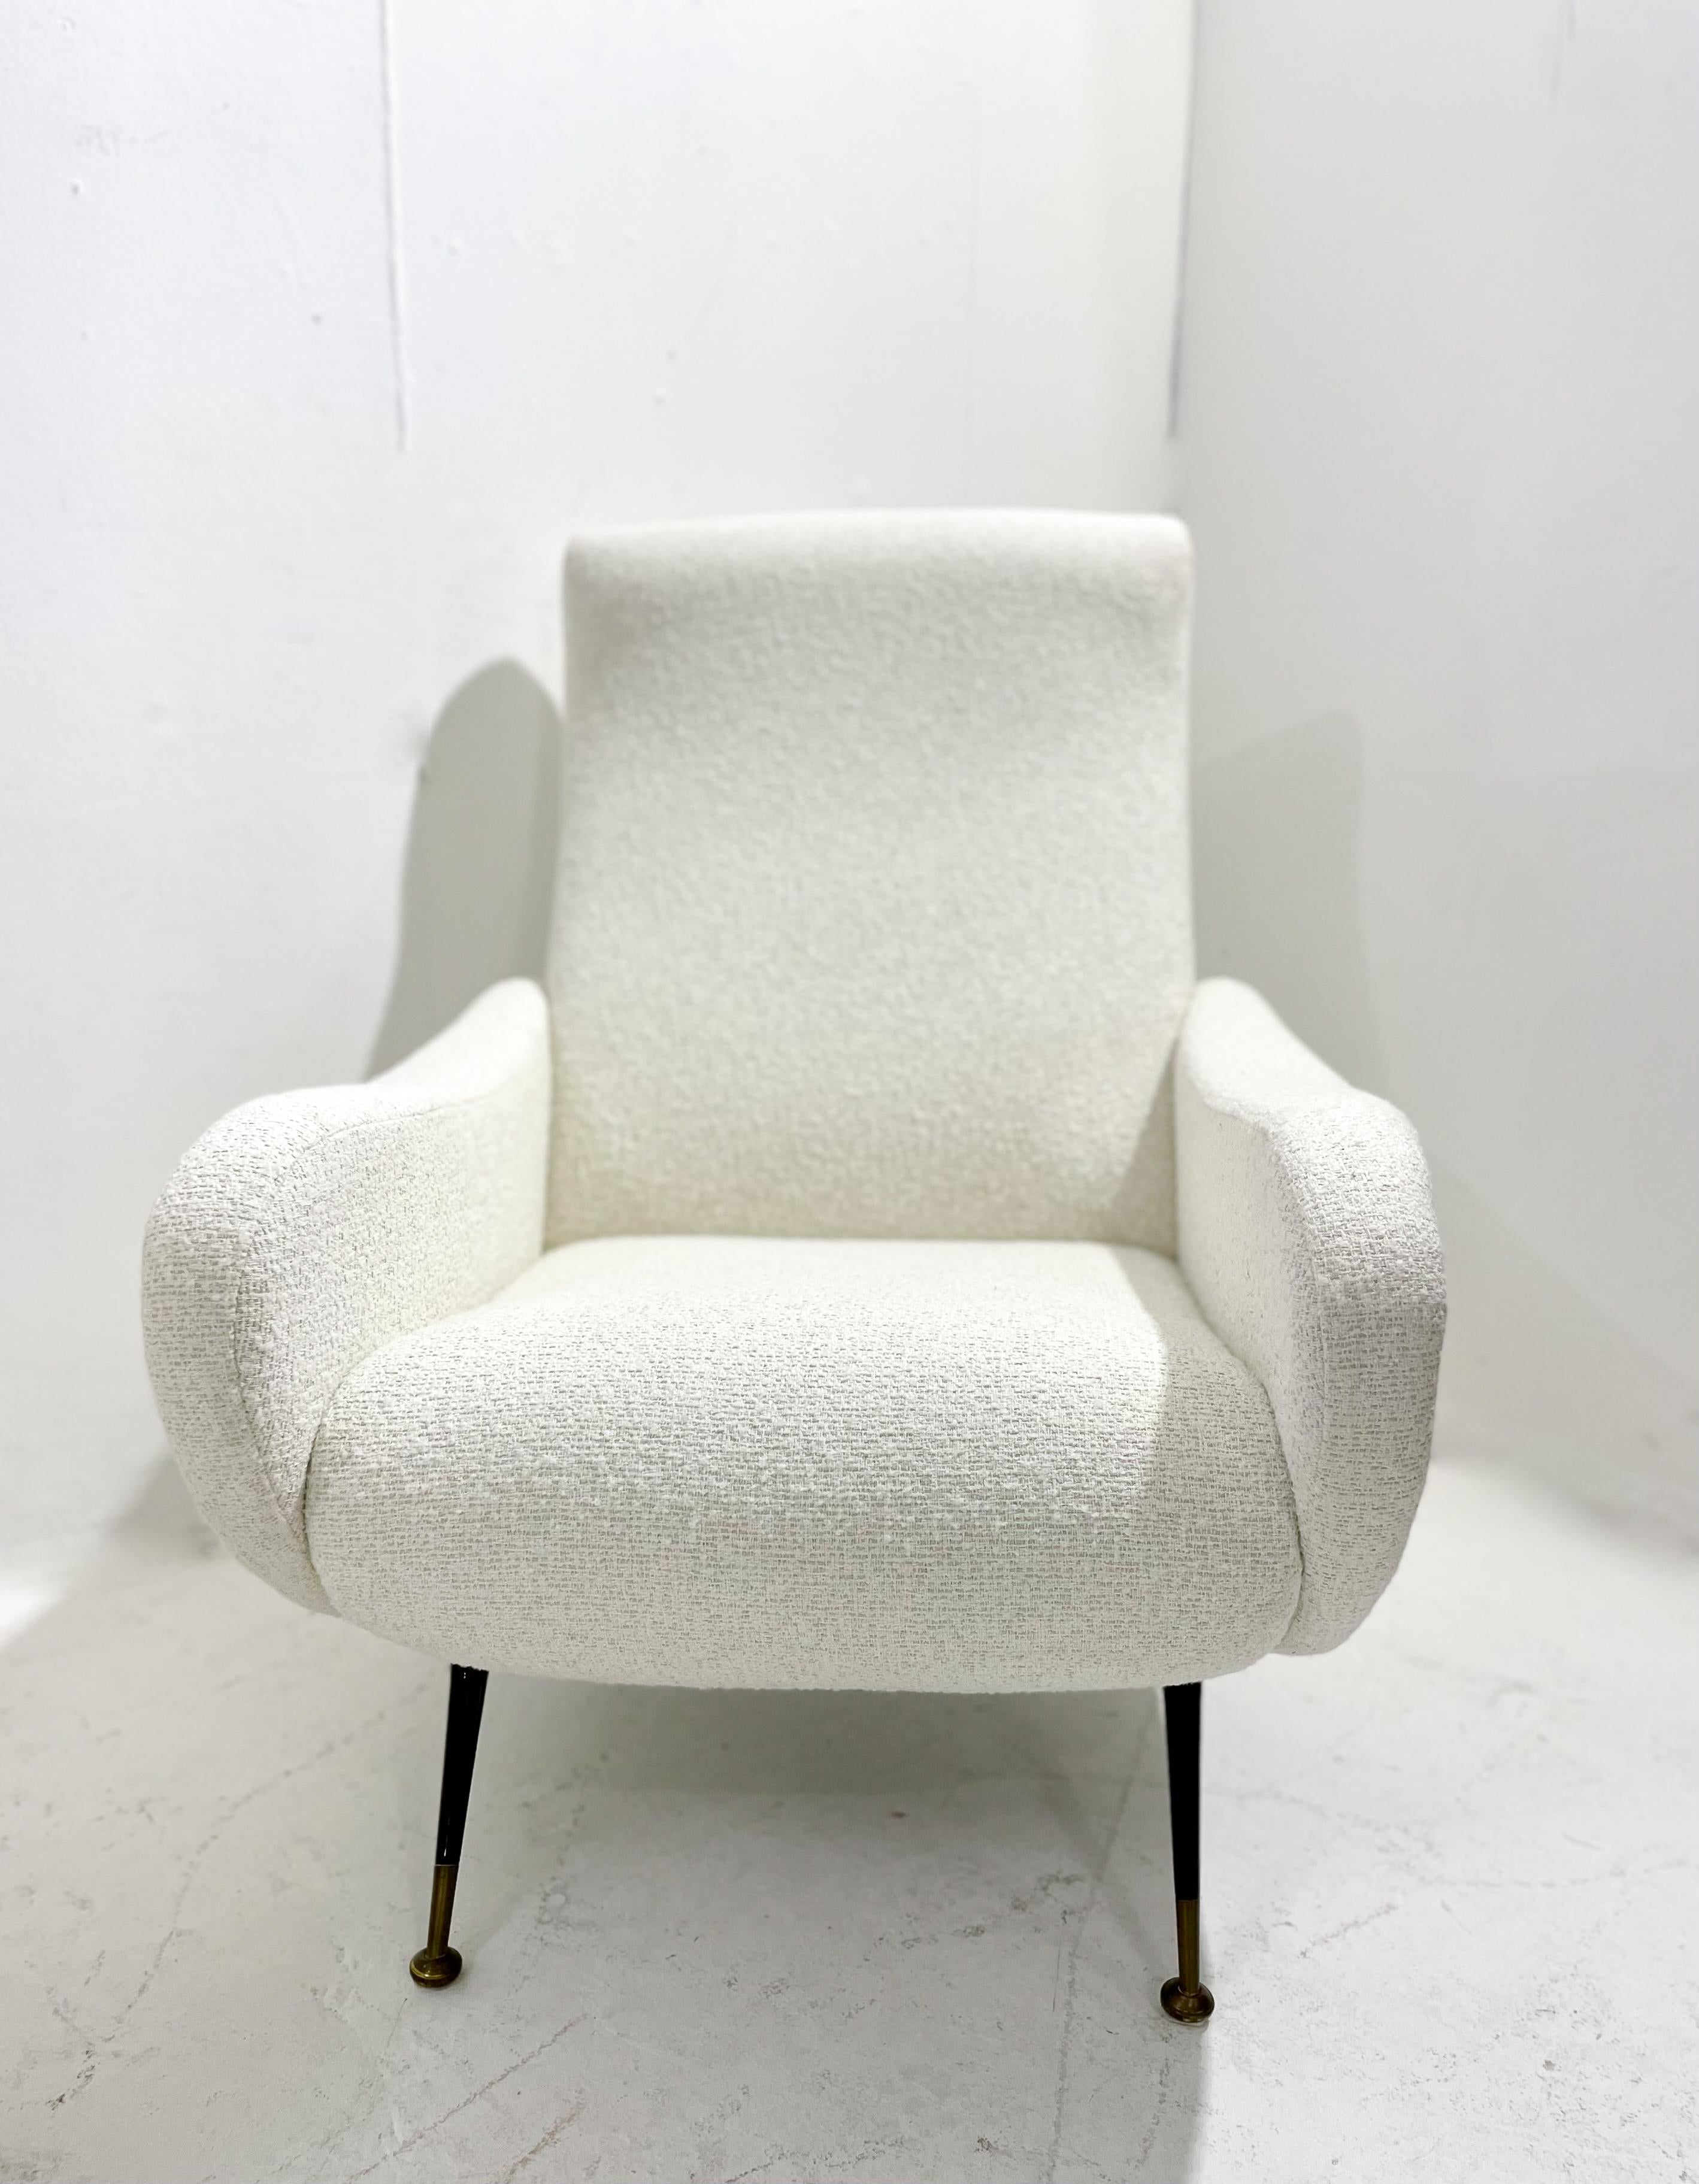 Mid-Century Modern pair of Italian armchairs, white fabric, 1950s.
New upholstery.